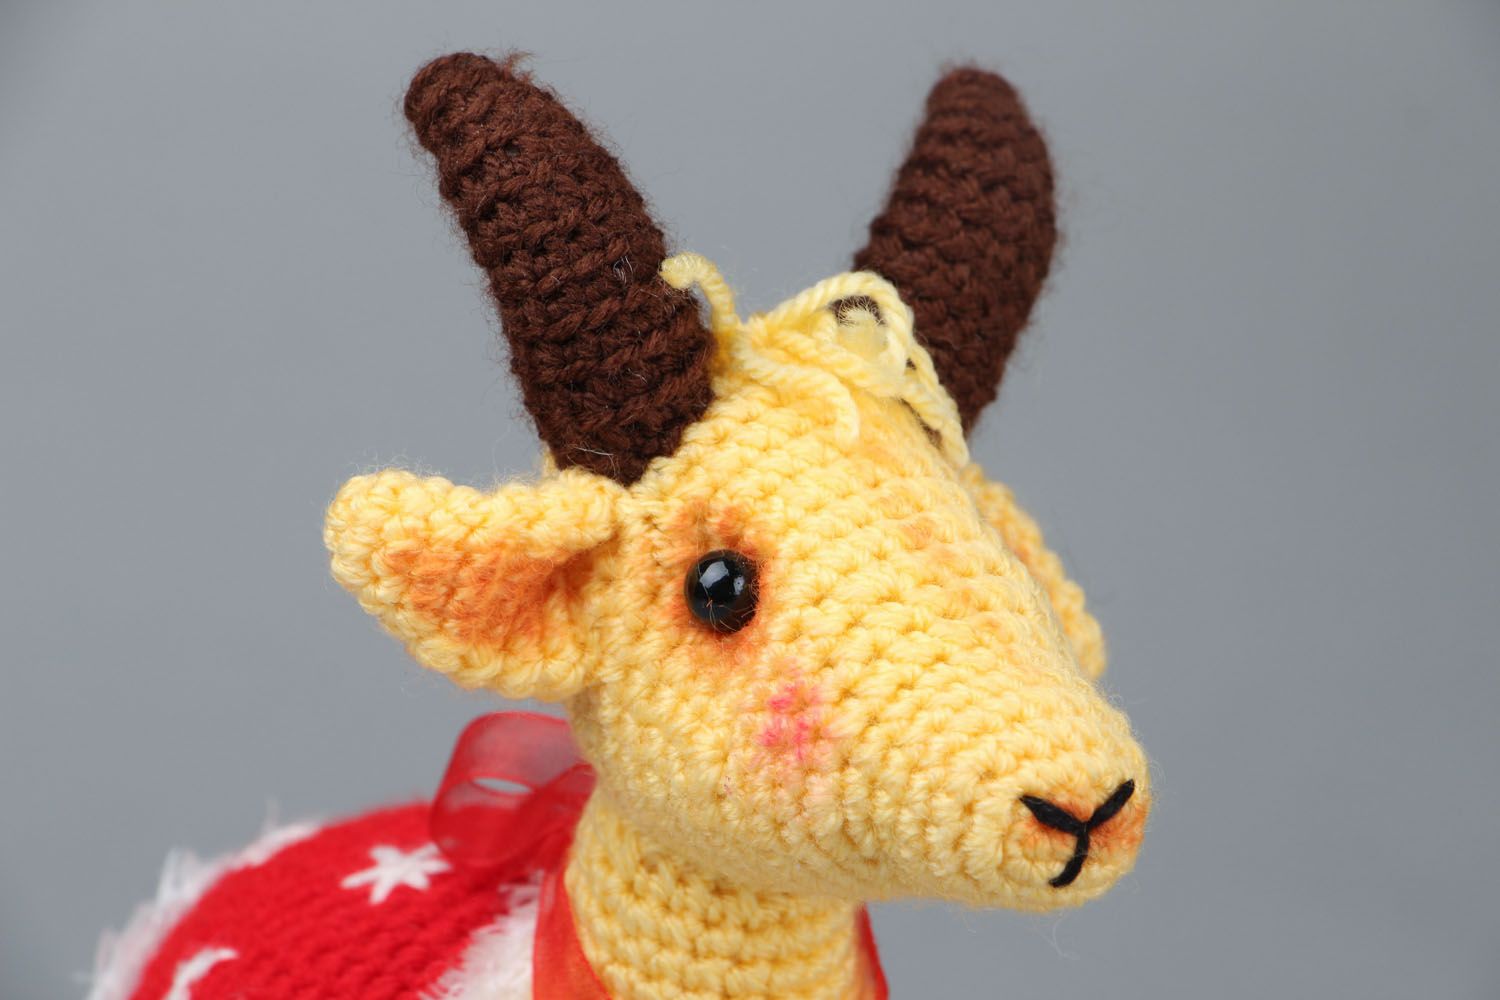 Crocheted handmade toy Christmas Goat photo 2